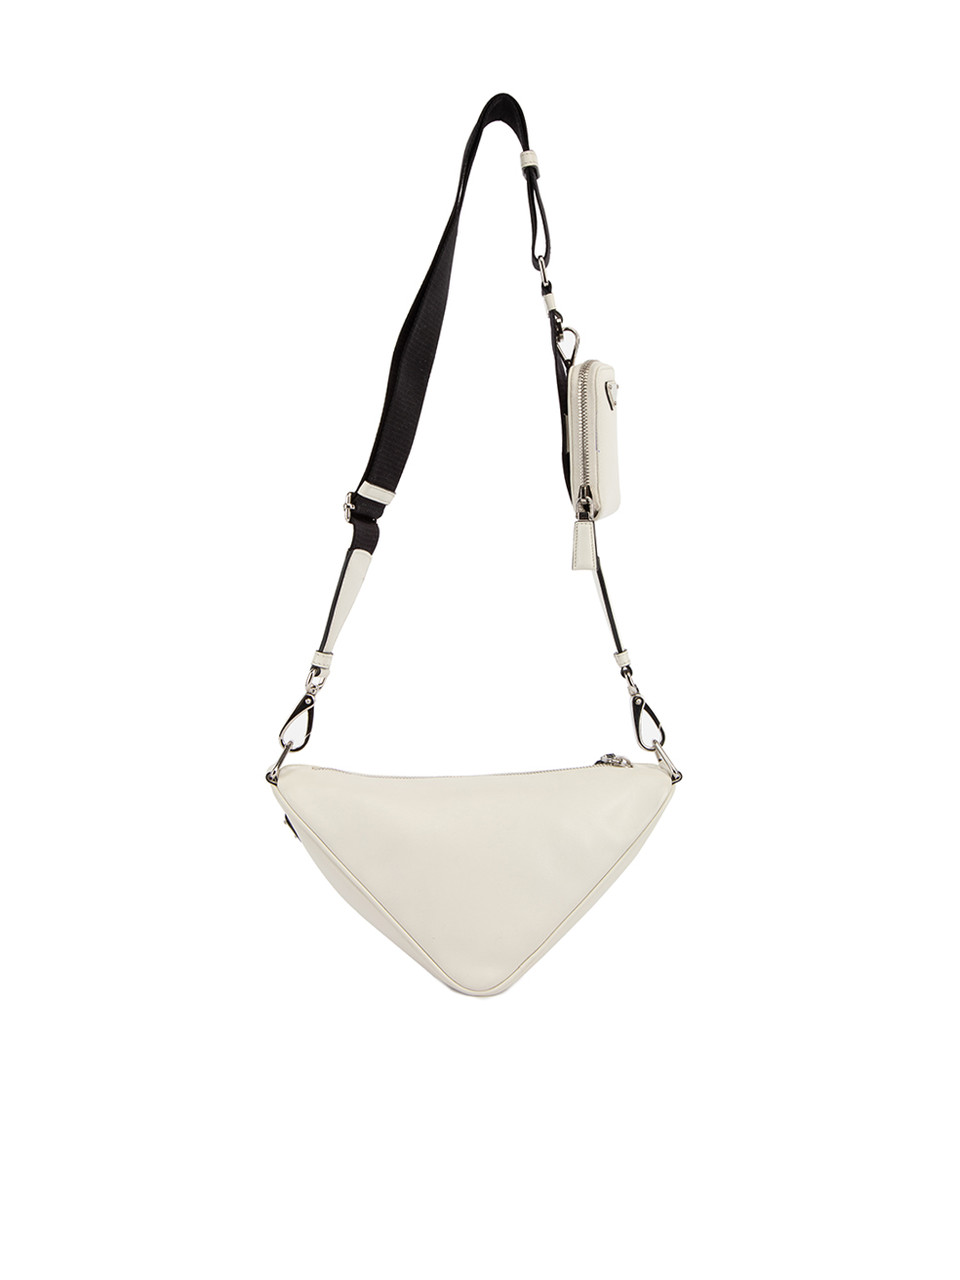 Prada White Leather Triangle Shoulder Bag